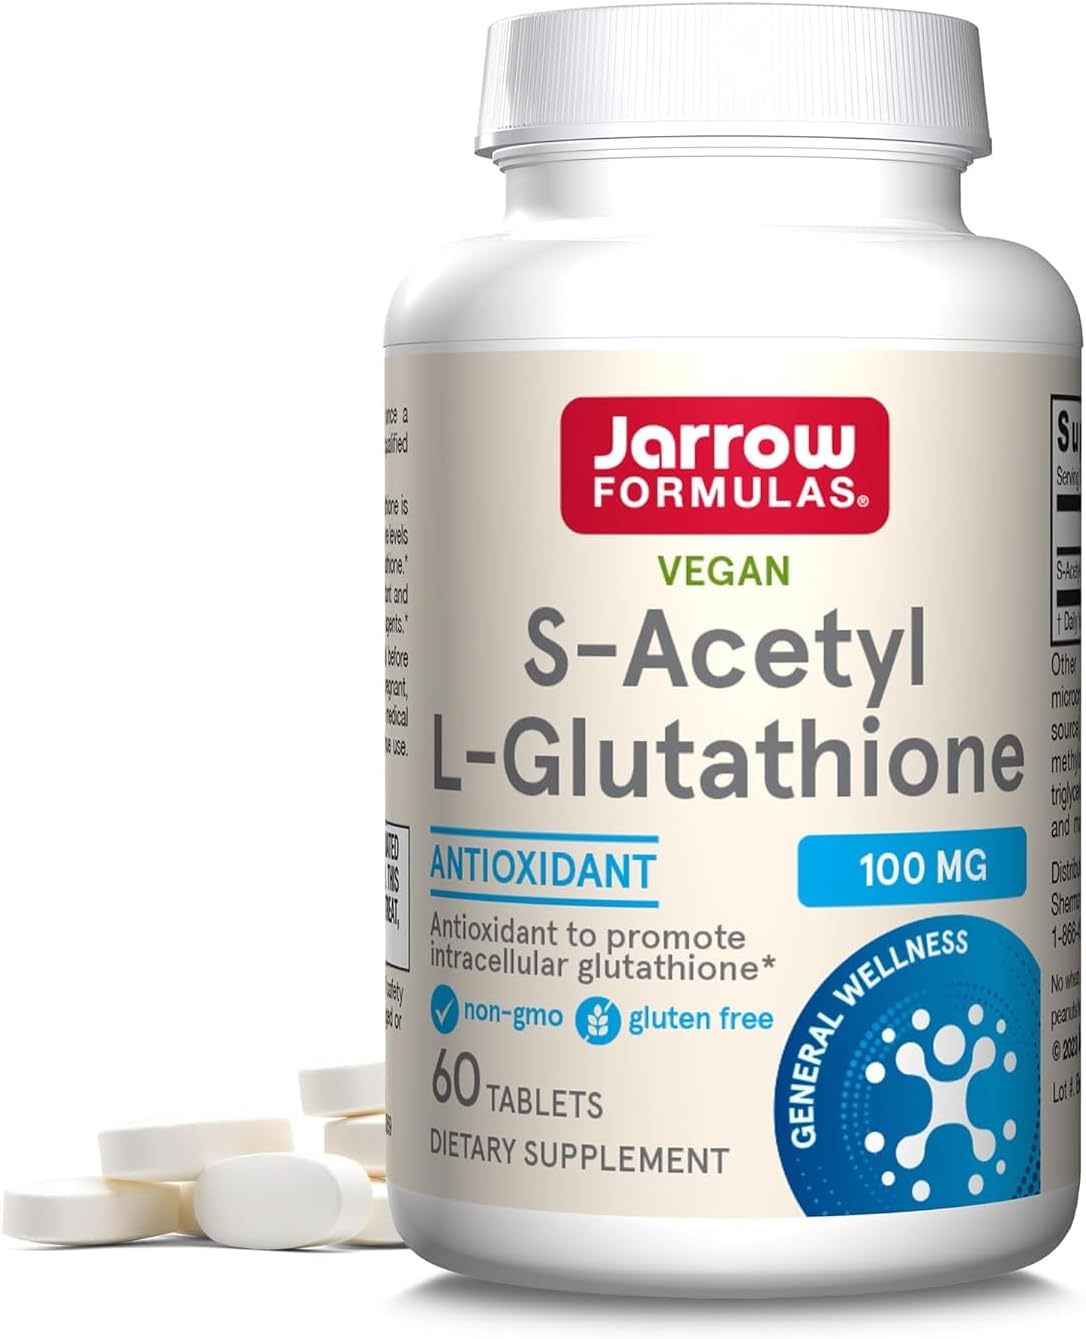 Jarrow S-Acetyl L-Glutathione